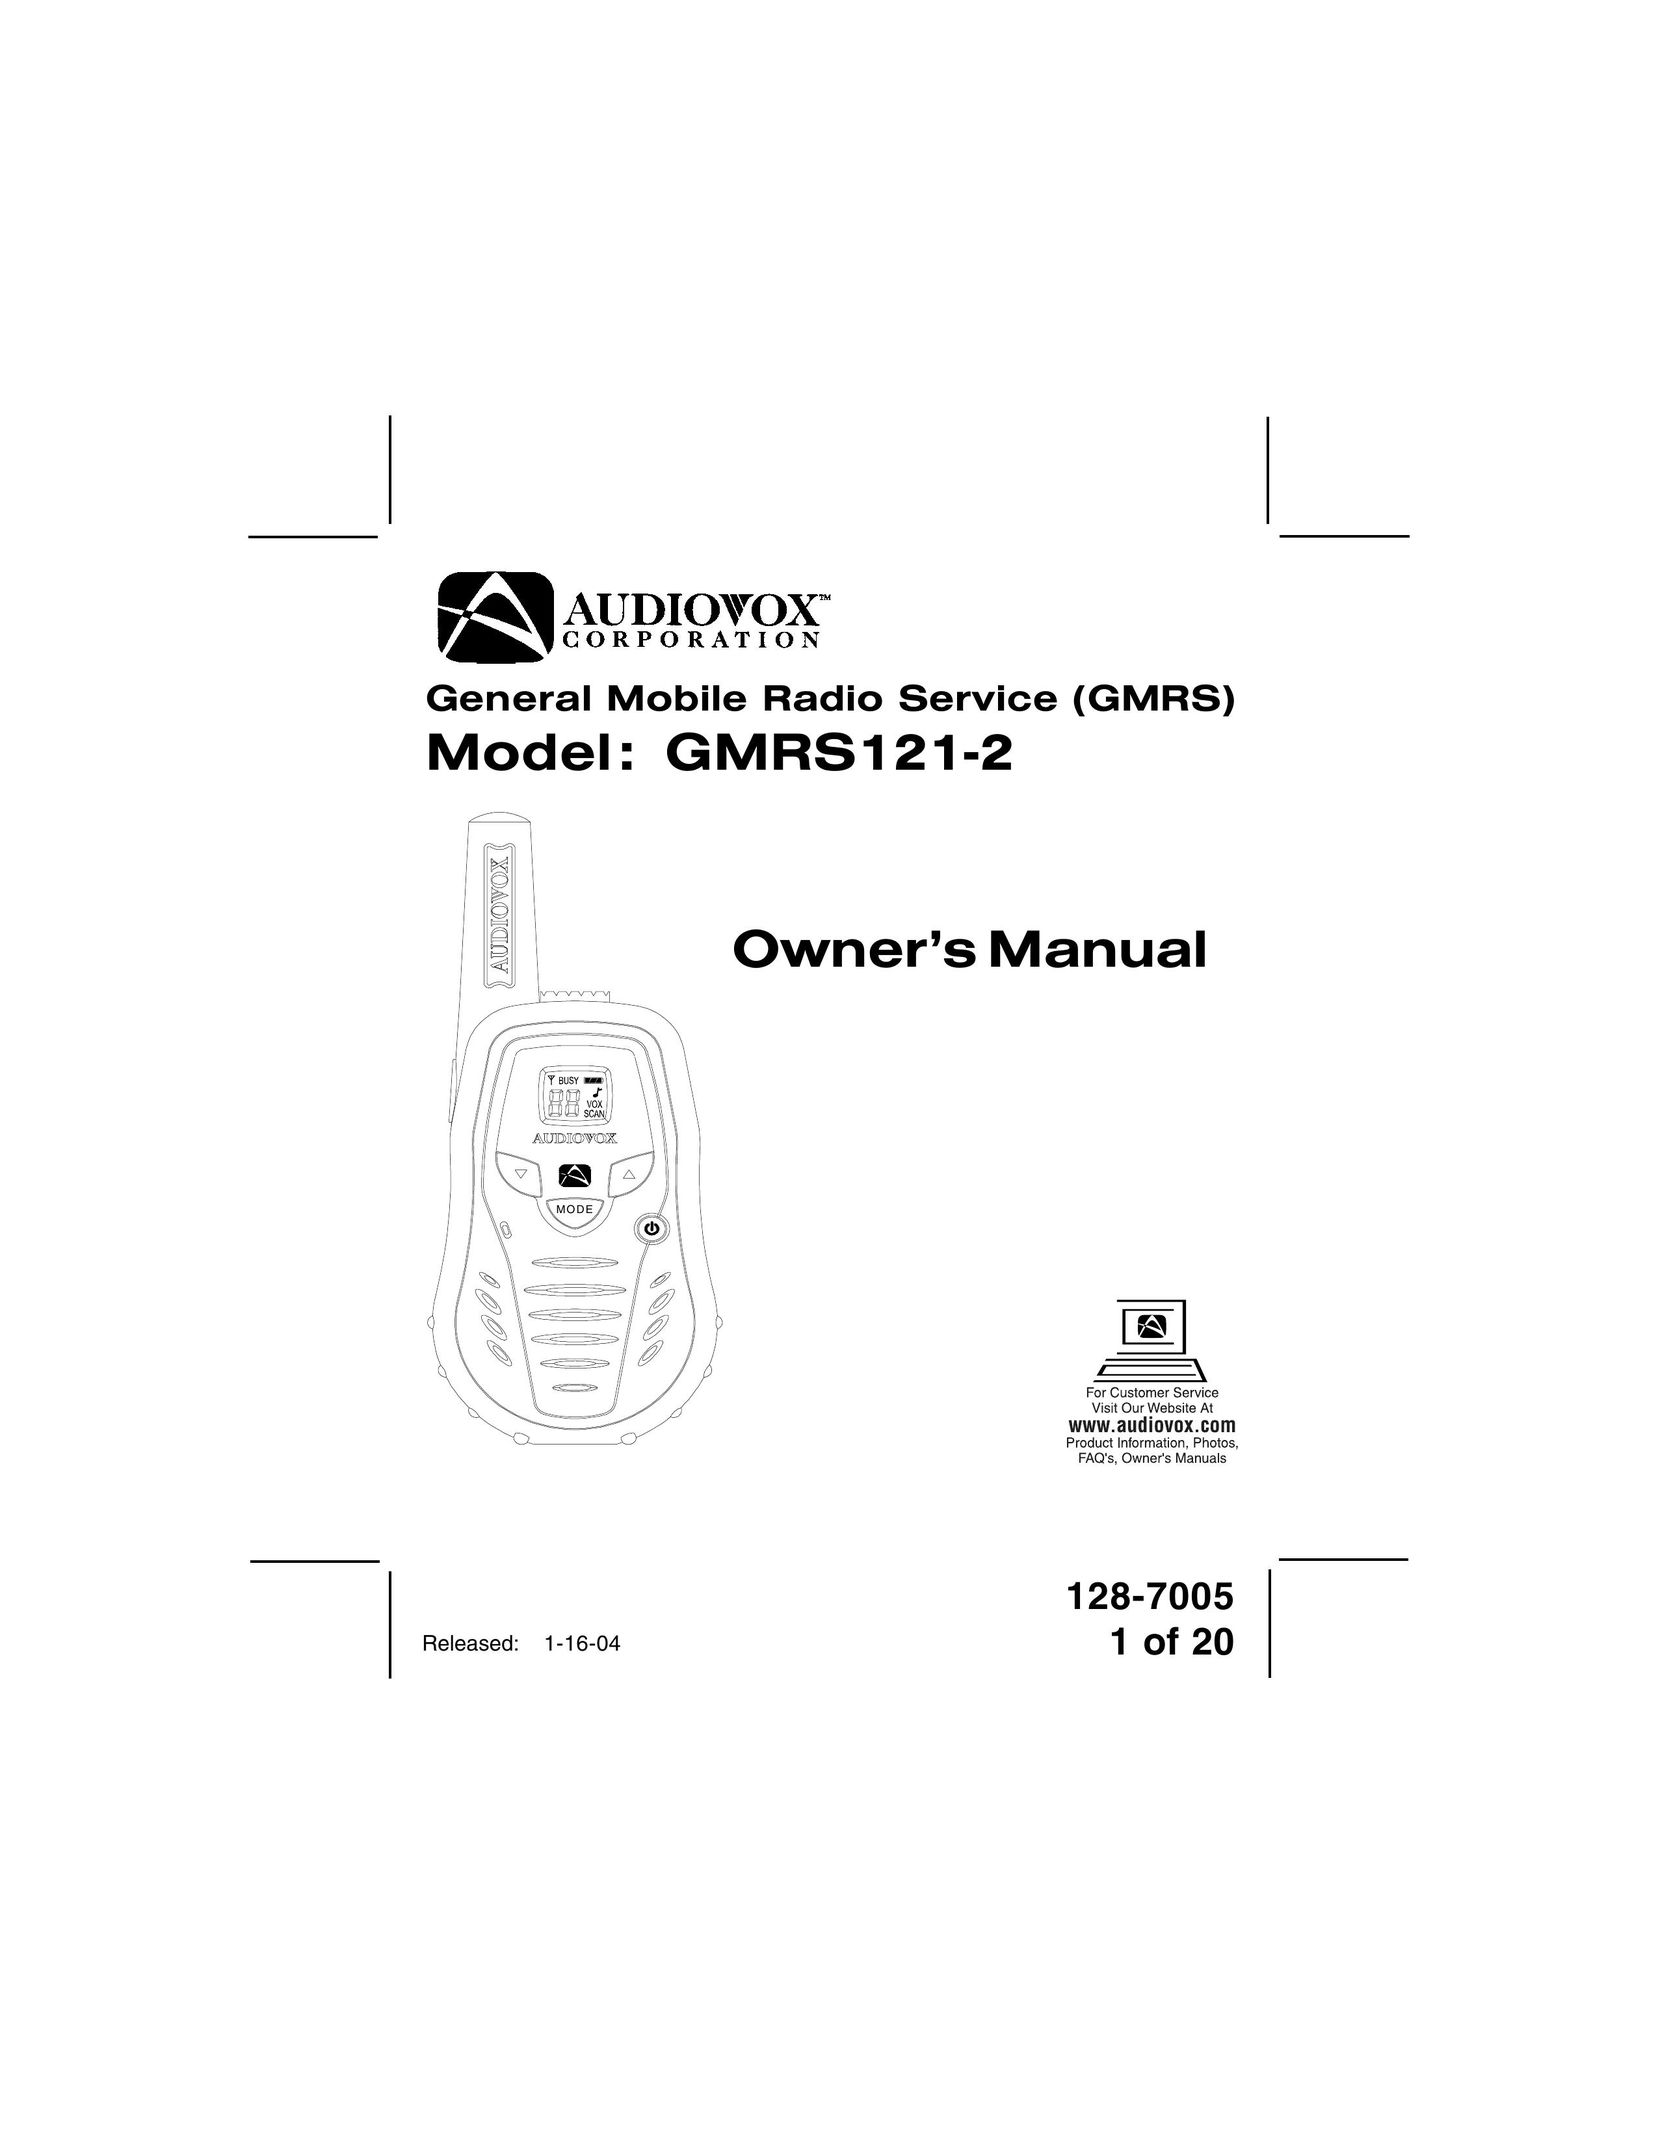 Audiovox GMRS121-2 Two-Way Radio User Manual